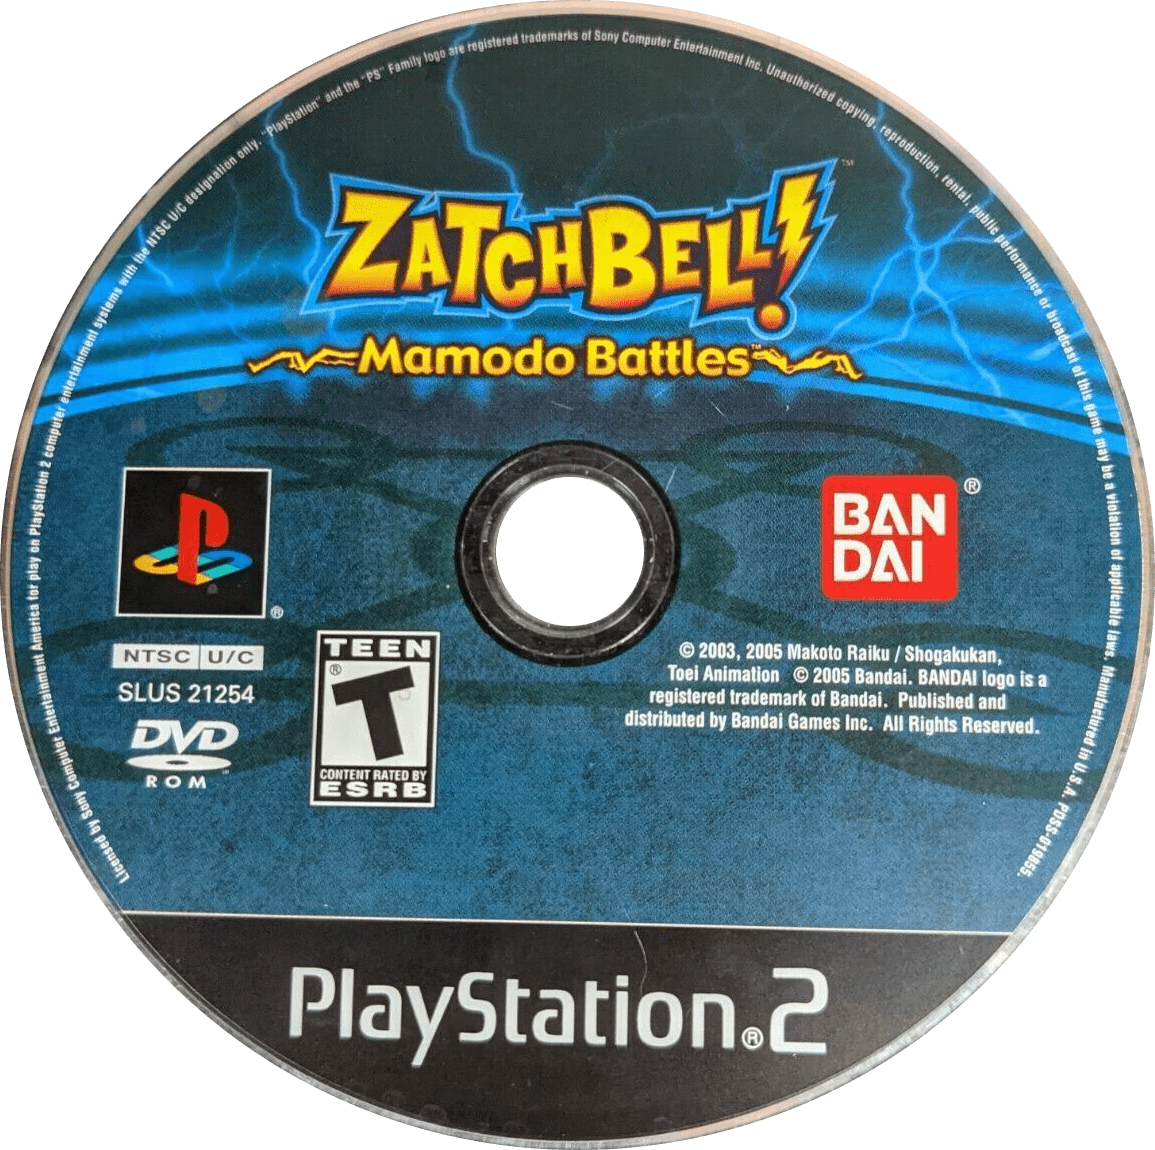 zatch-bell-mamodo-battles-images-launchbox-games-database